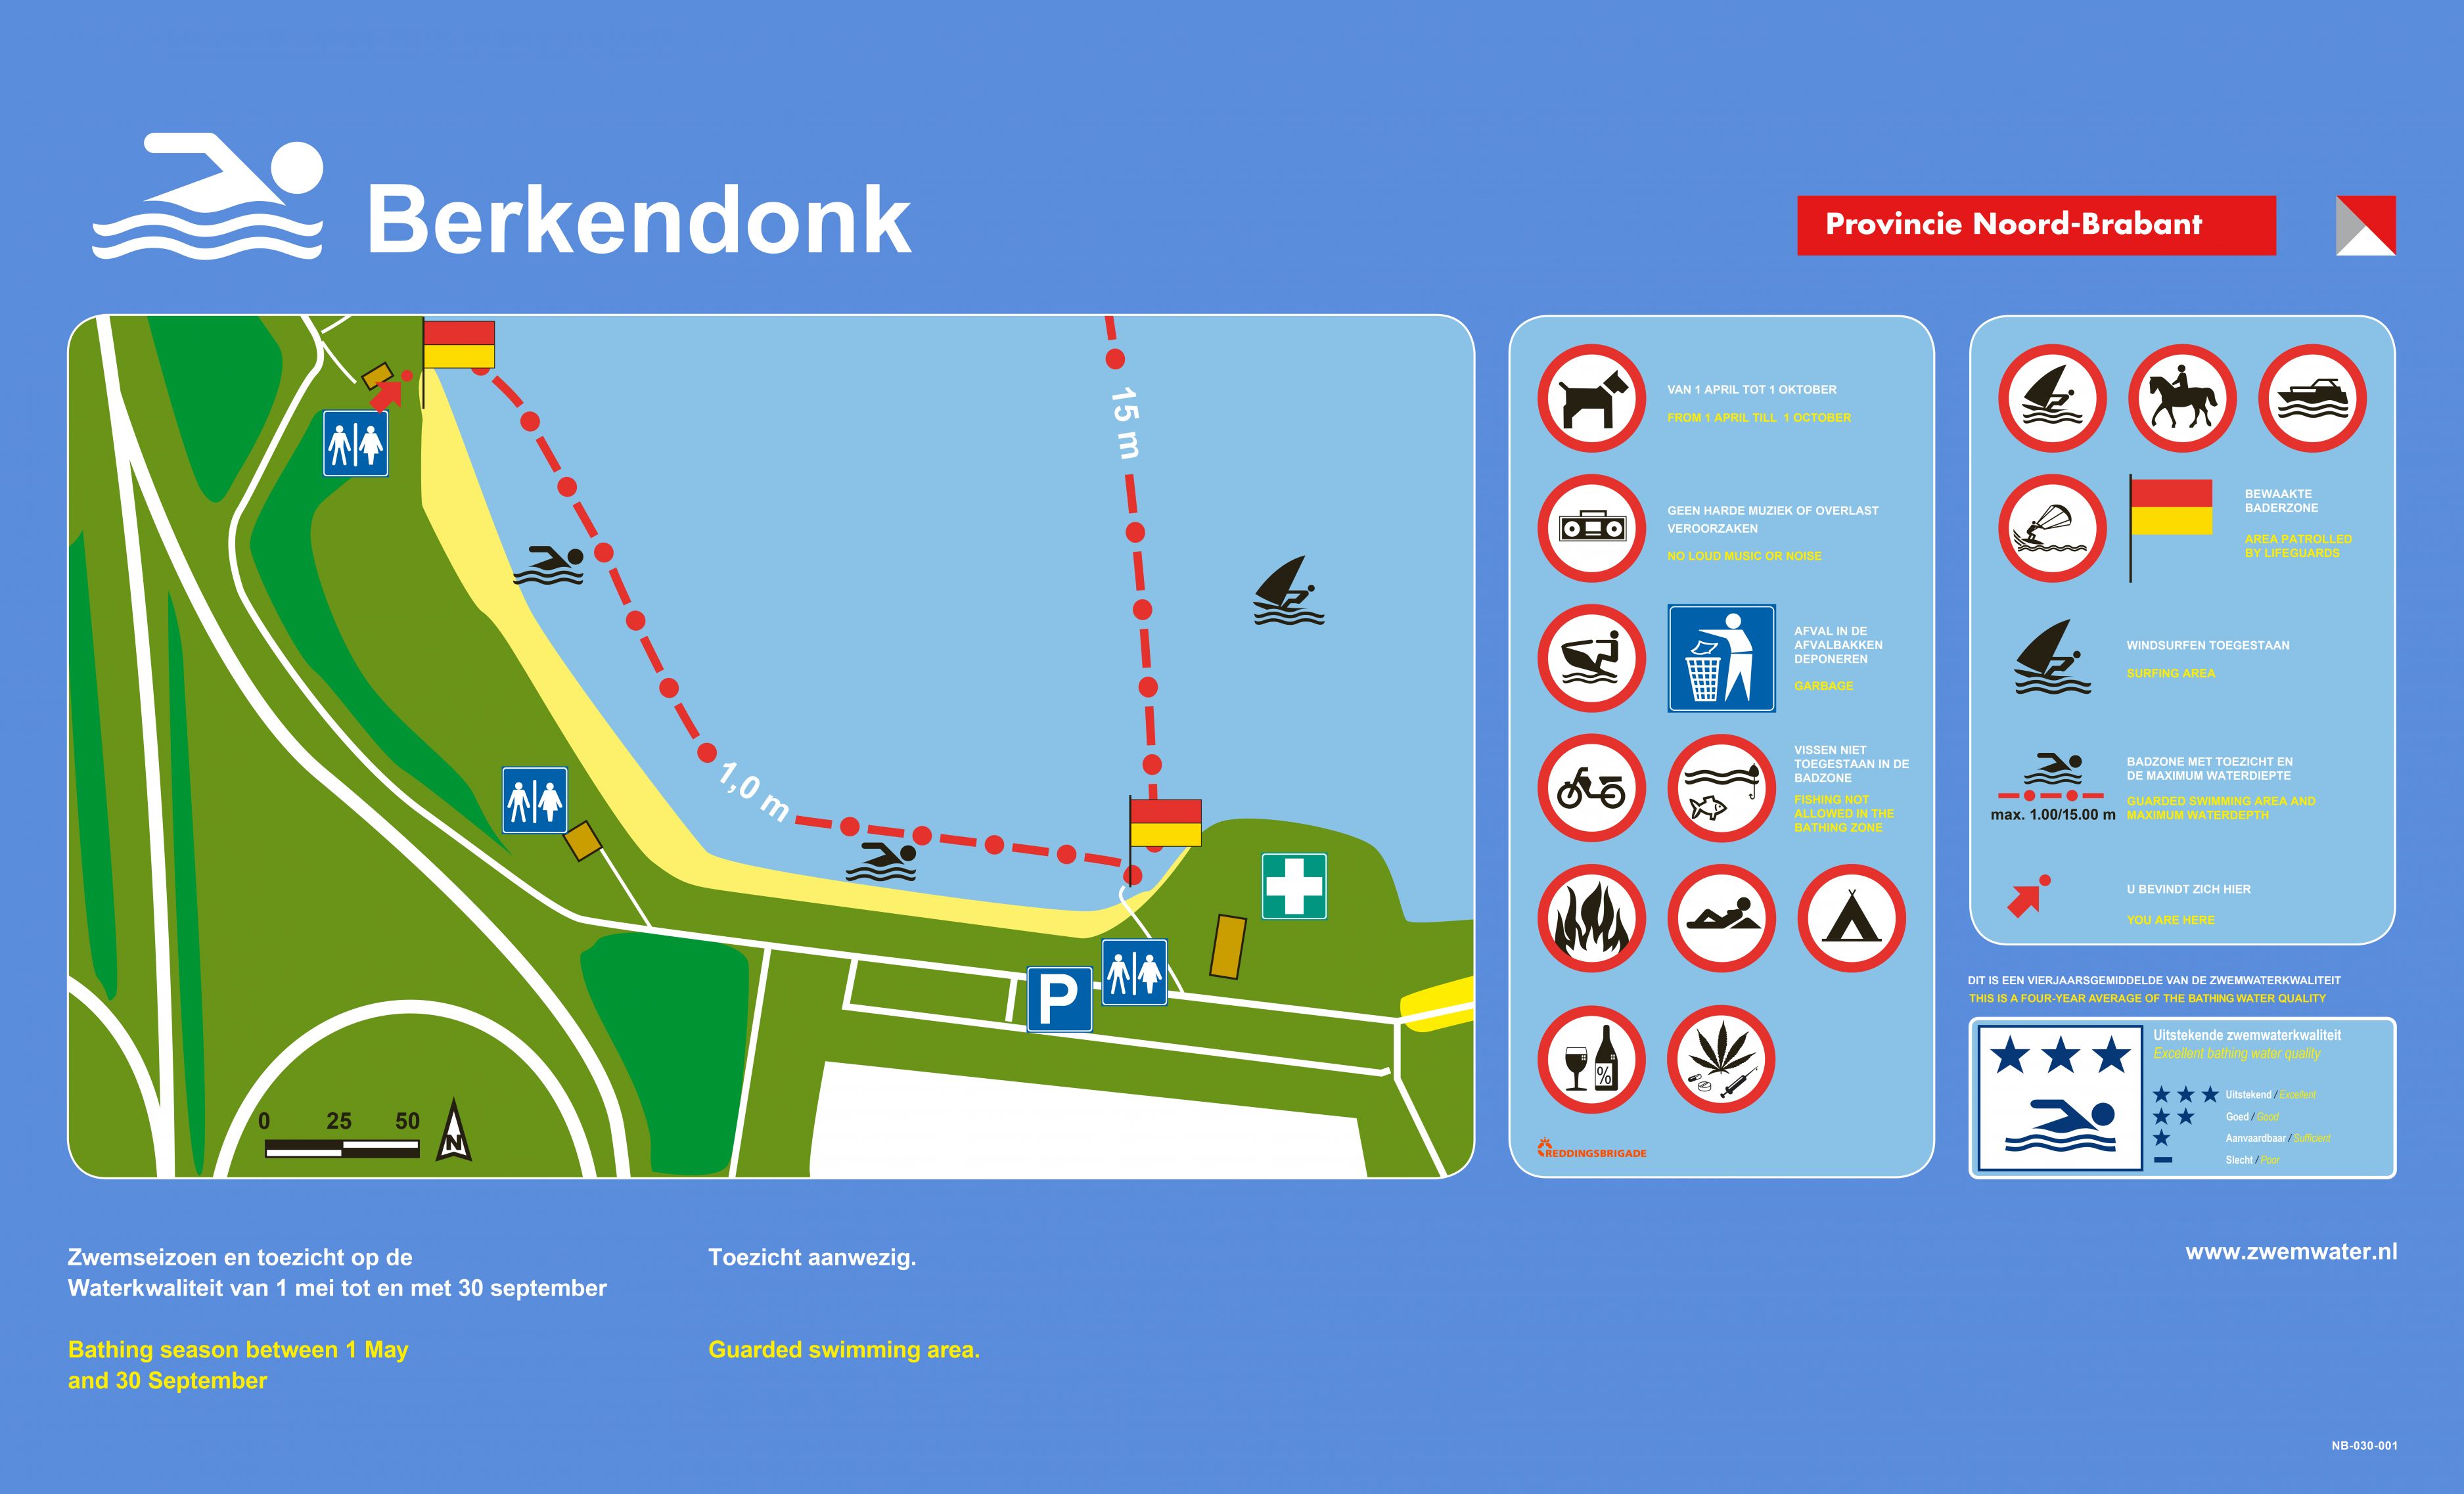 The information board at the swimming location Berkendonk, Helmond, Zwemzone 120m West van Strandwachthuis